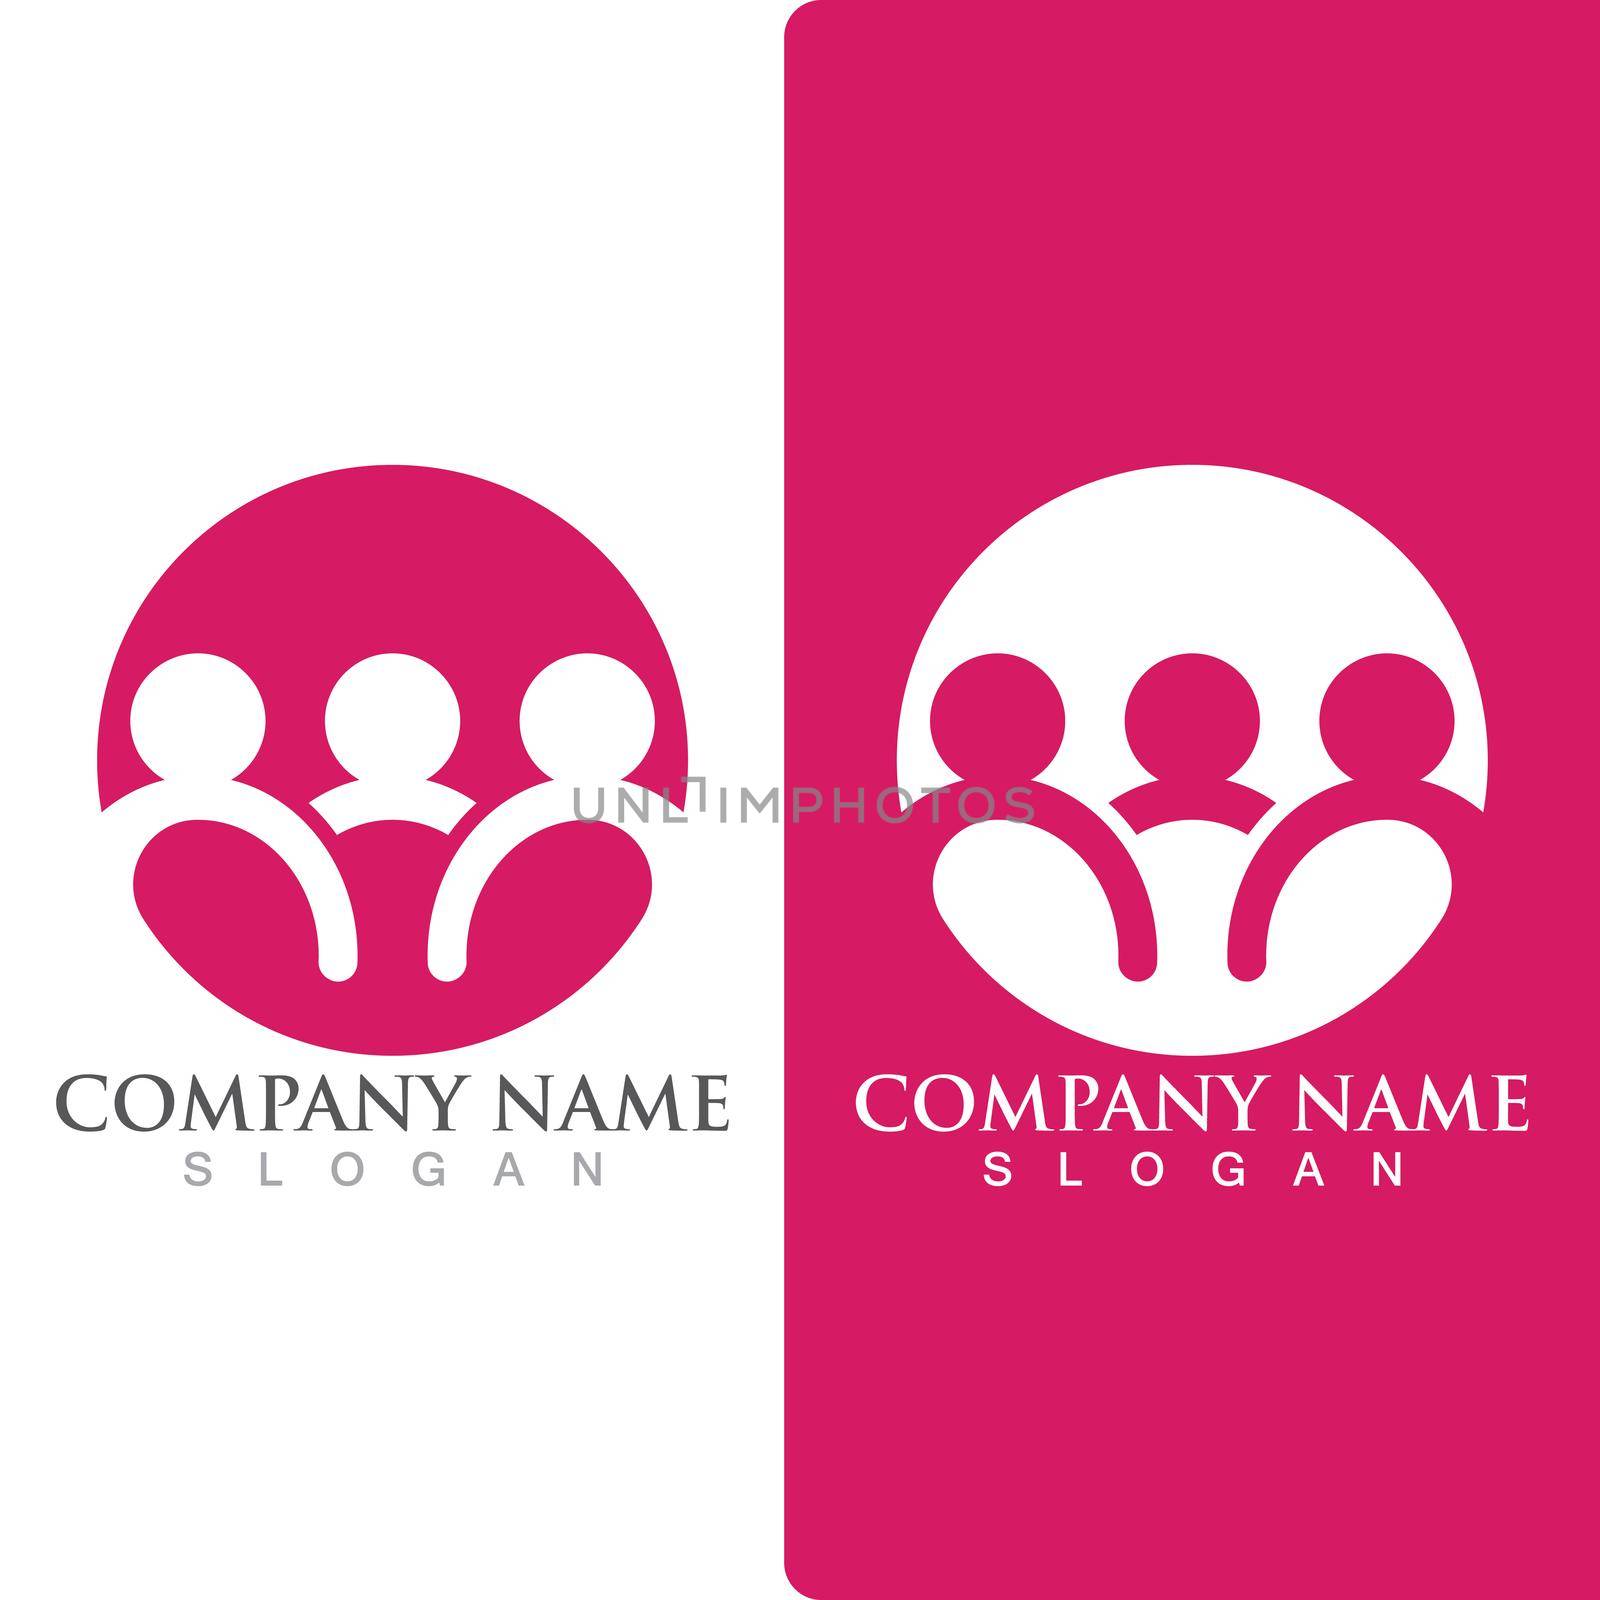 Adoption logo and symbol social icon design by Mrsongrphc